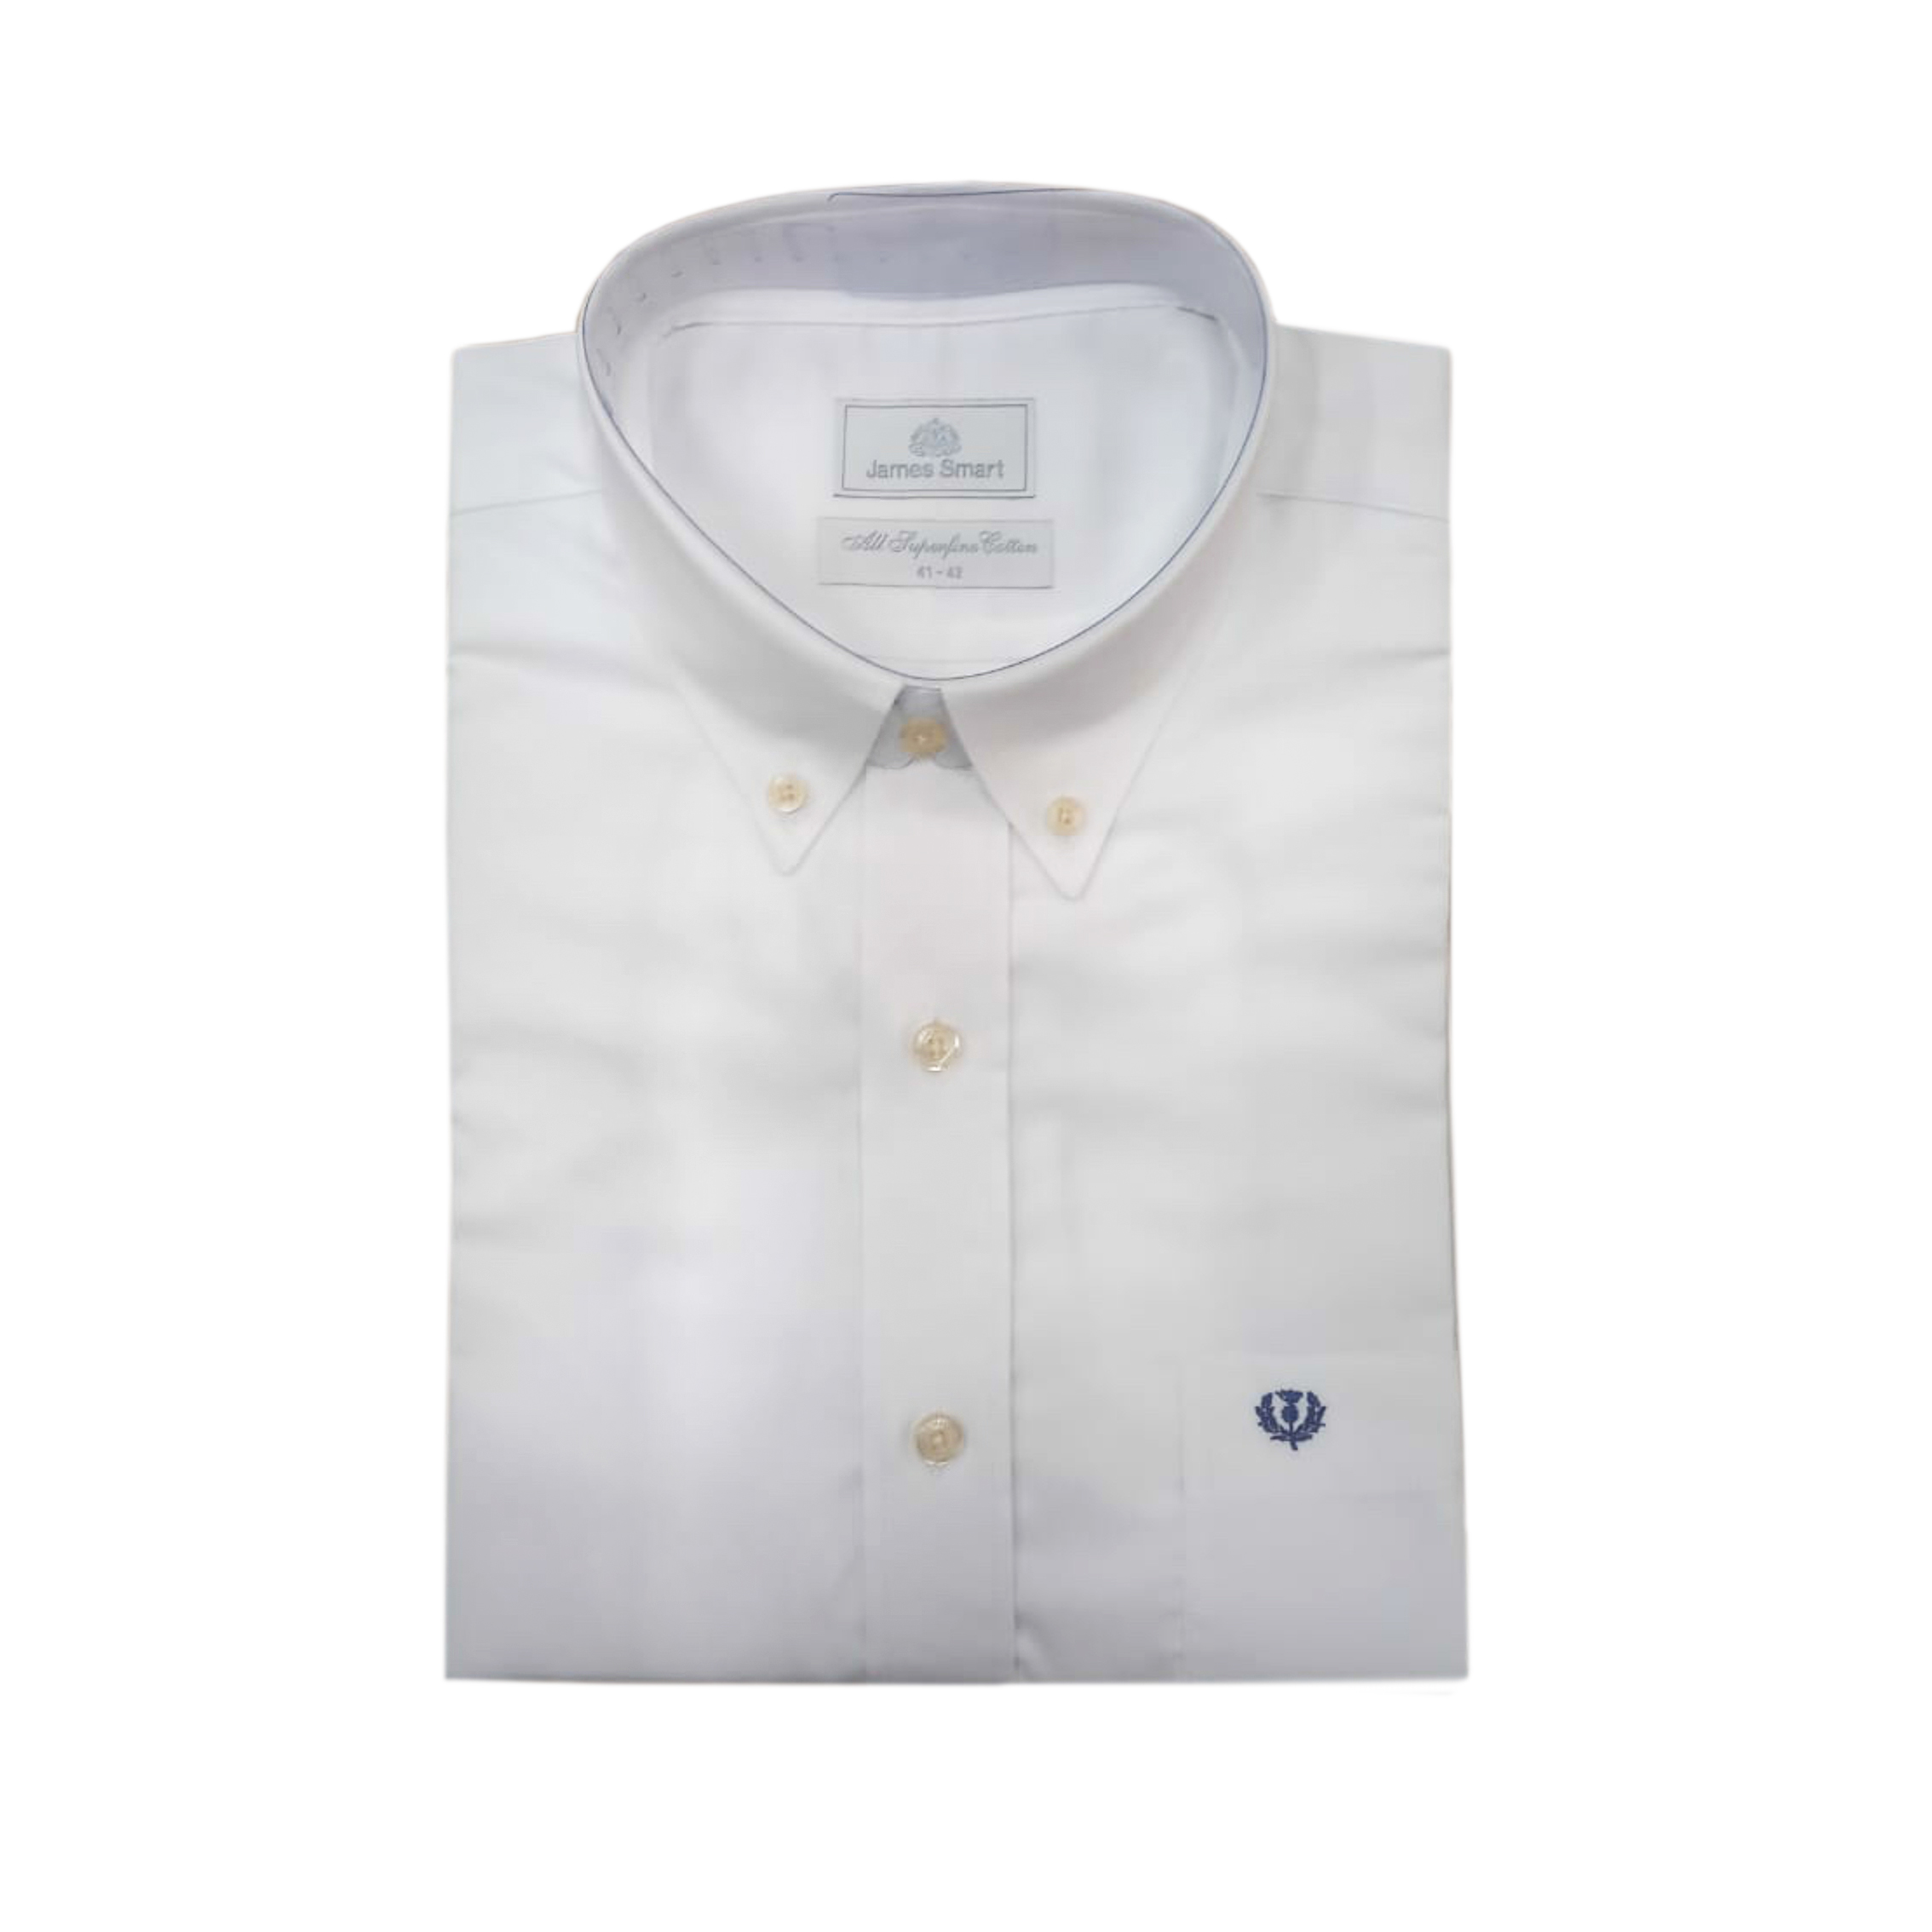 Art 17237 camisa sport blanca manga larga